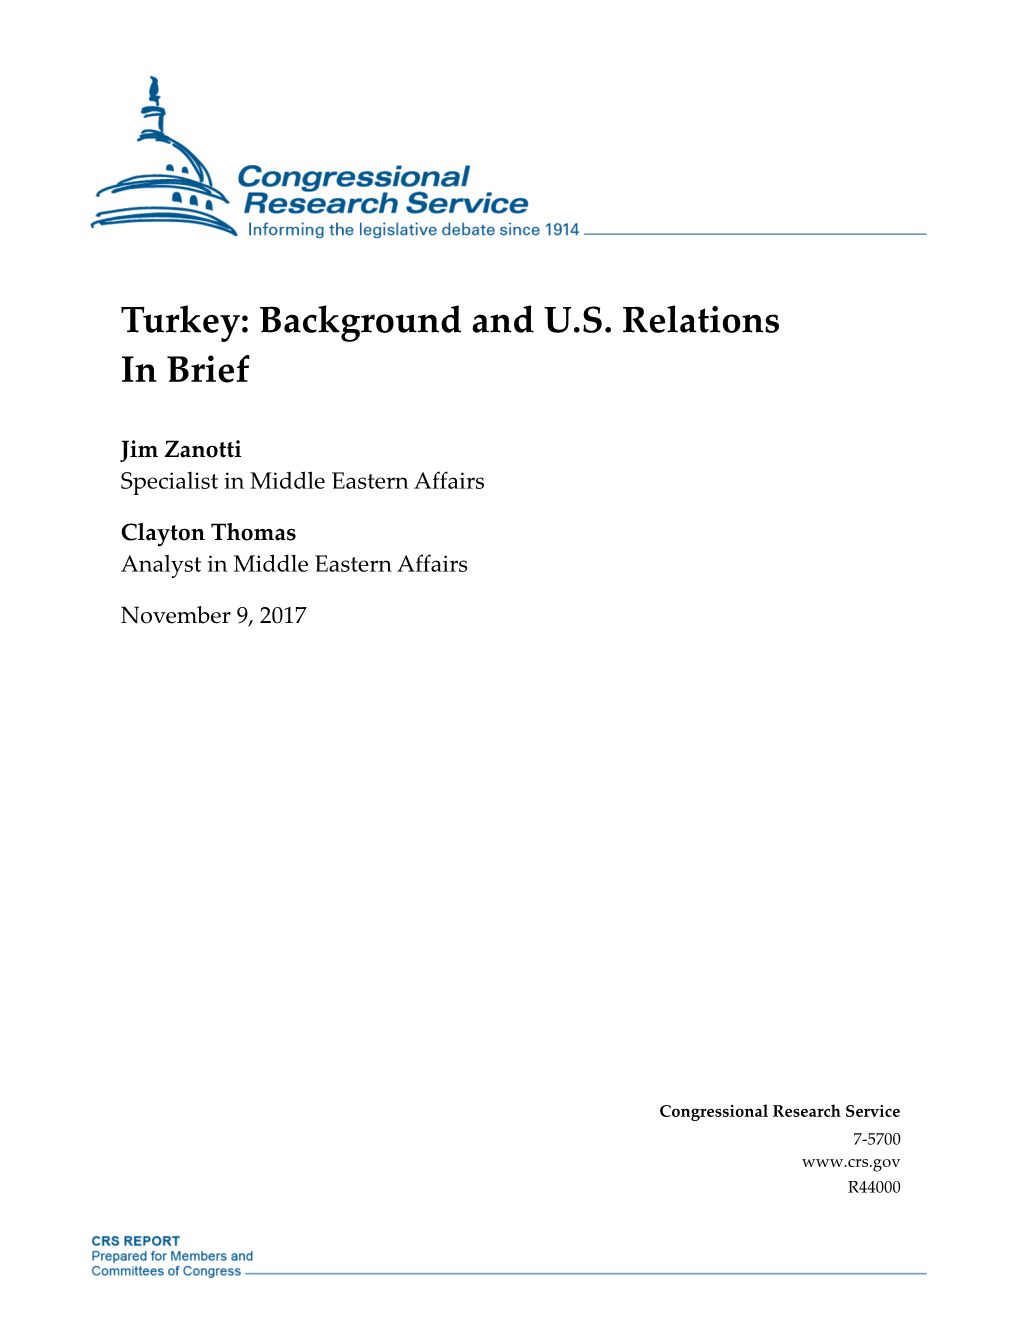 Turkey: Background and U.S. Relations in Brief